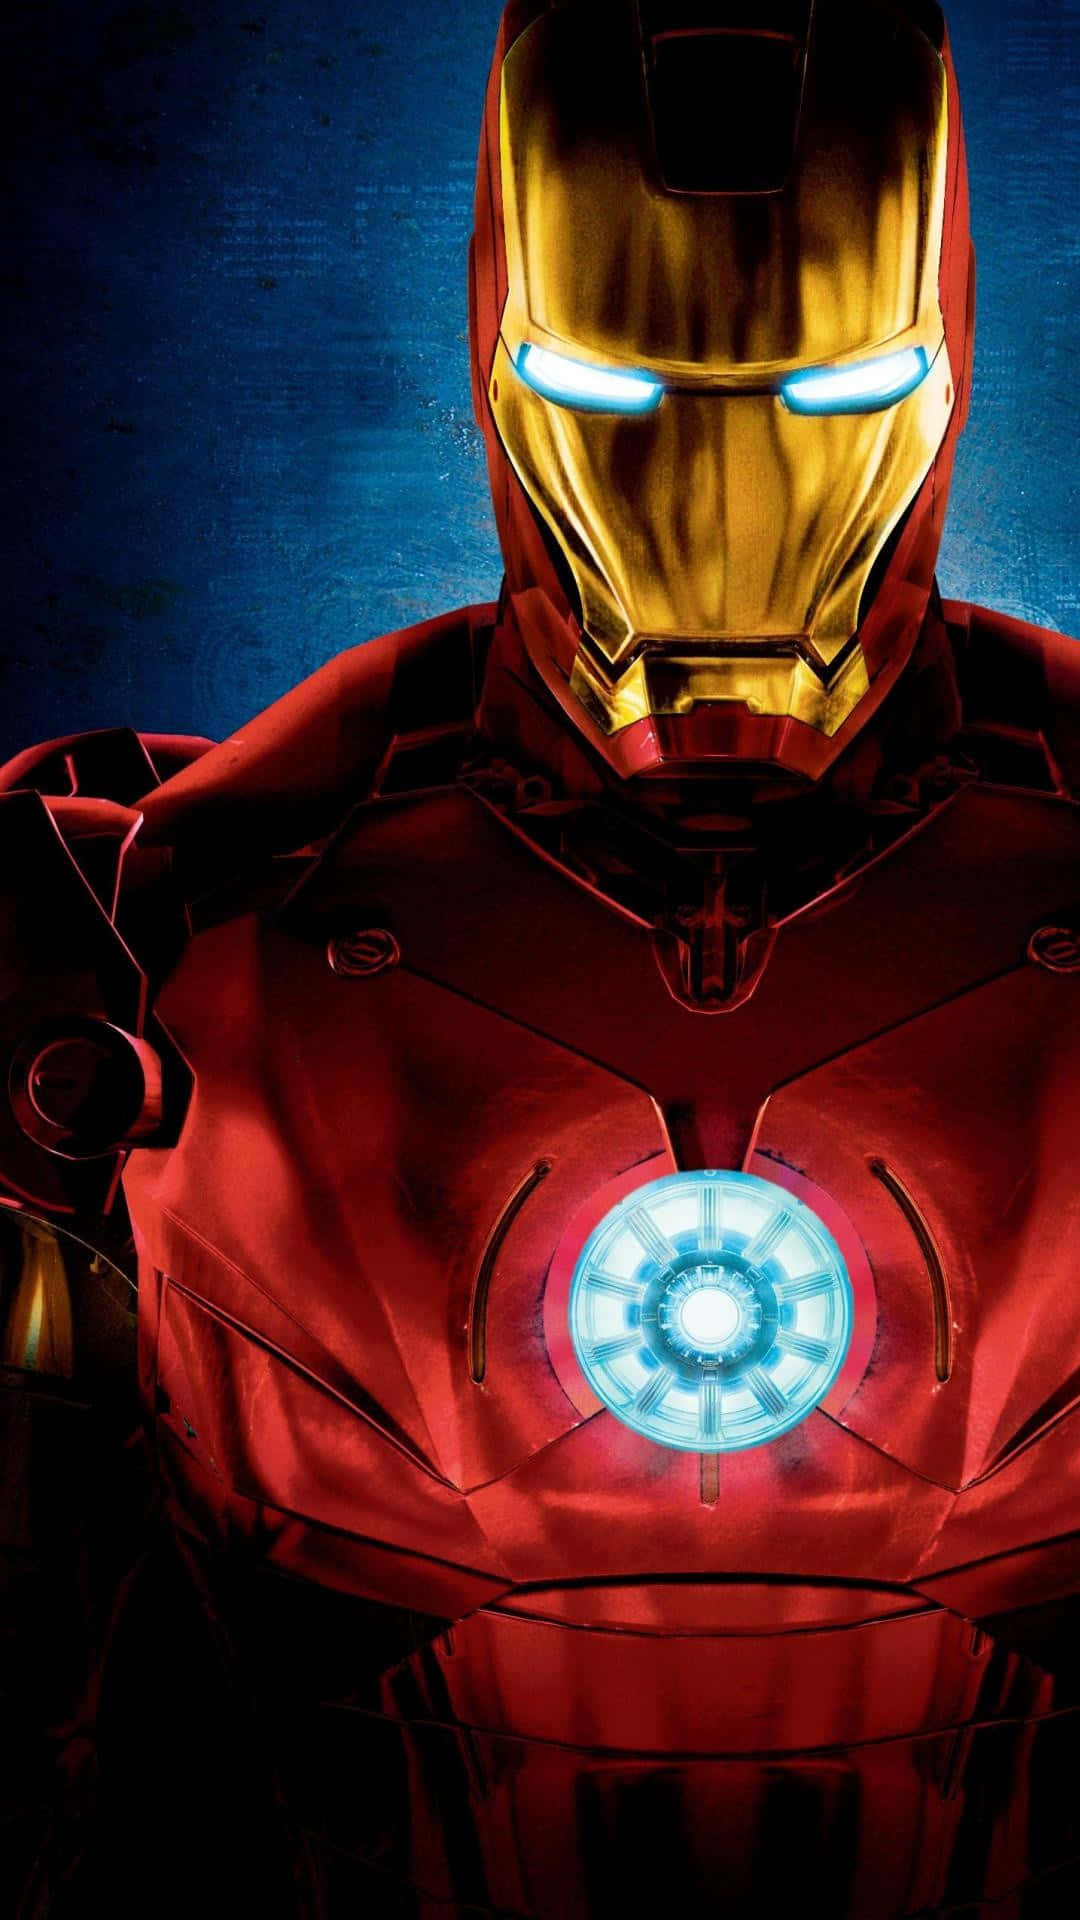 Enjoy Cool Iron Man Themed Iphone Wallpaper